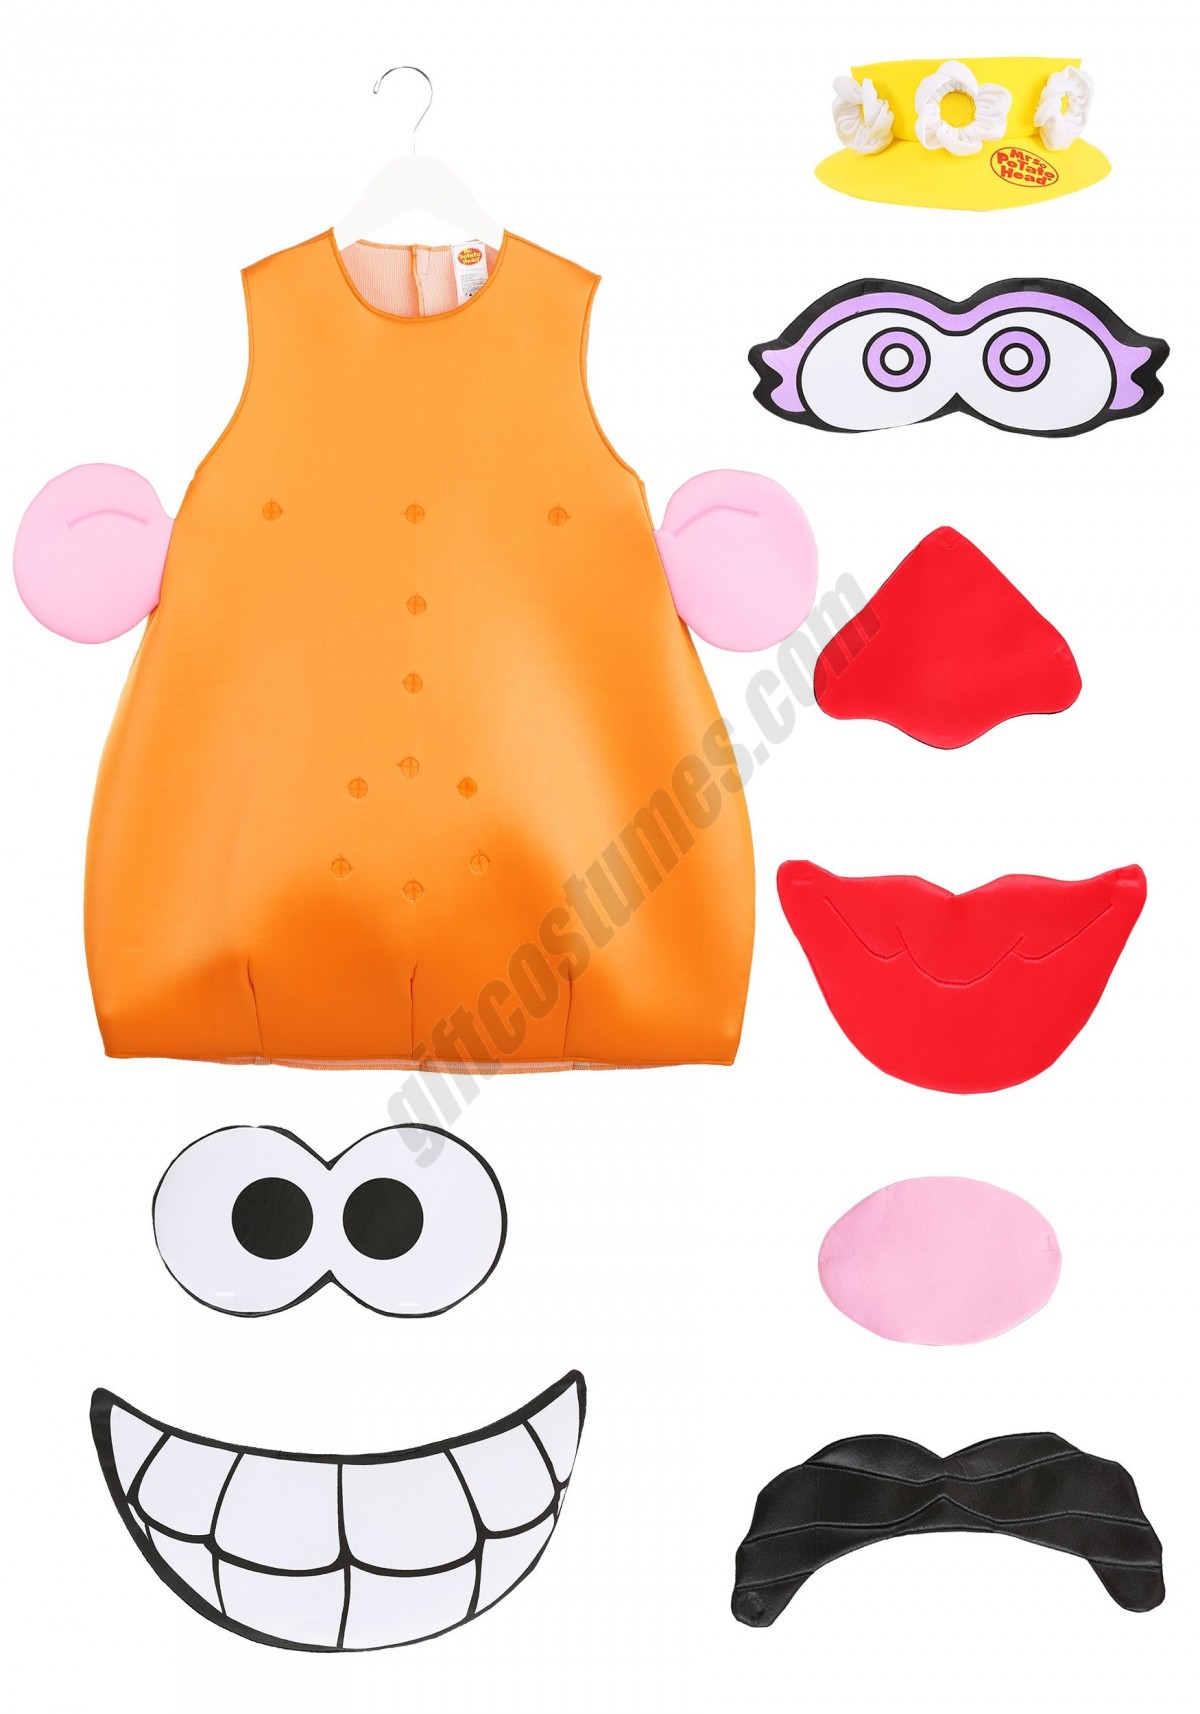 Adult Plus Size Costume Mr / Mrs Potato Head  - Men's - -8